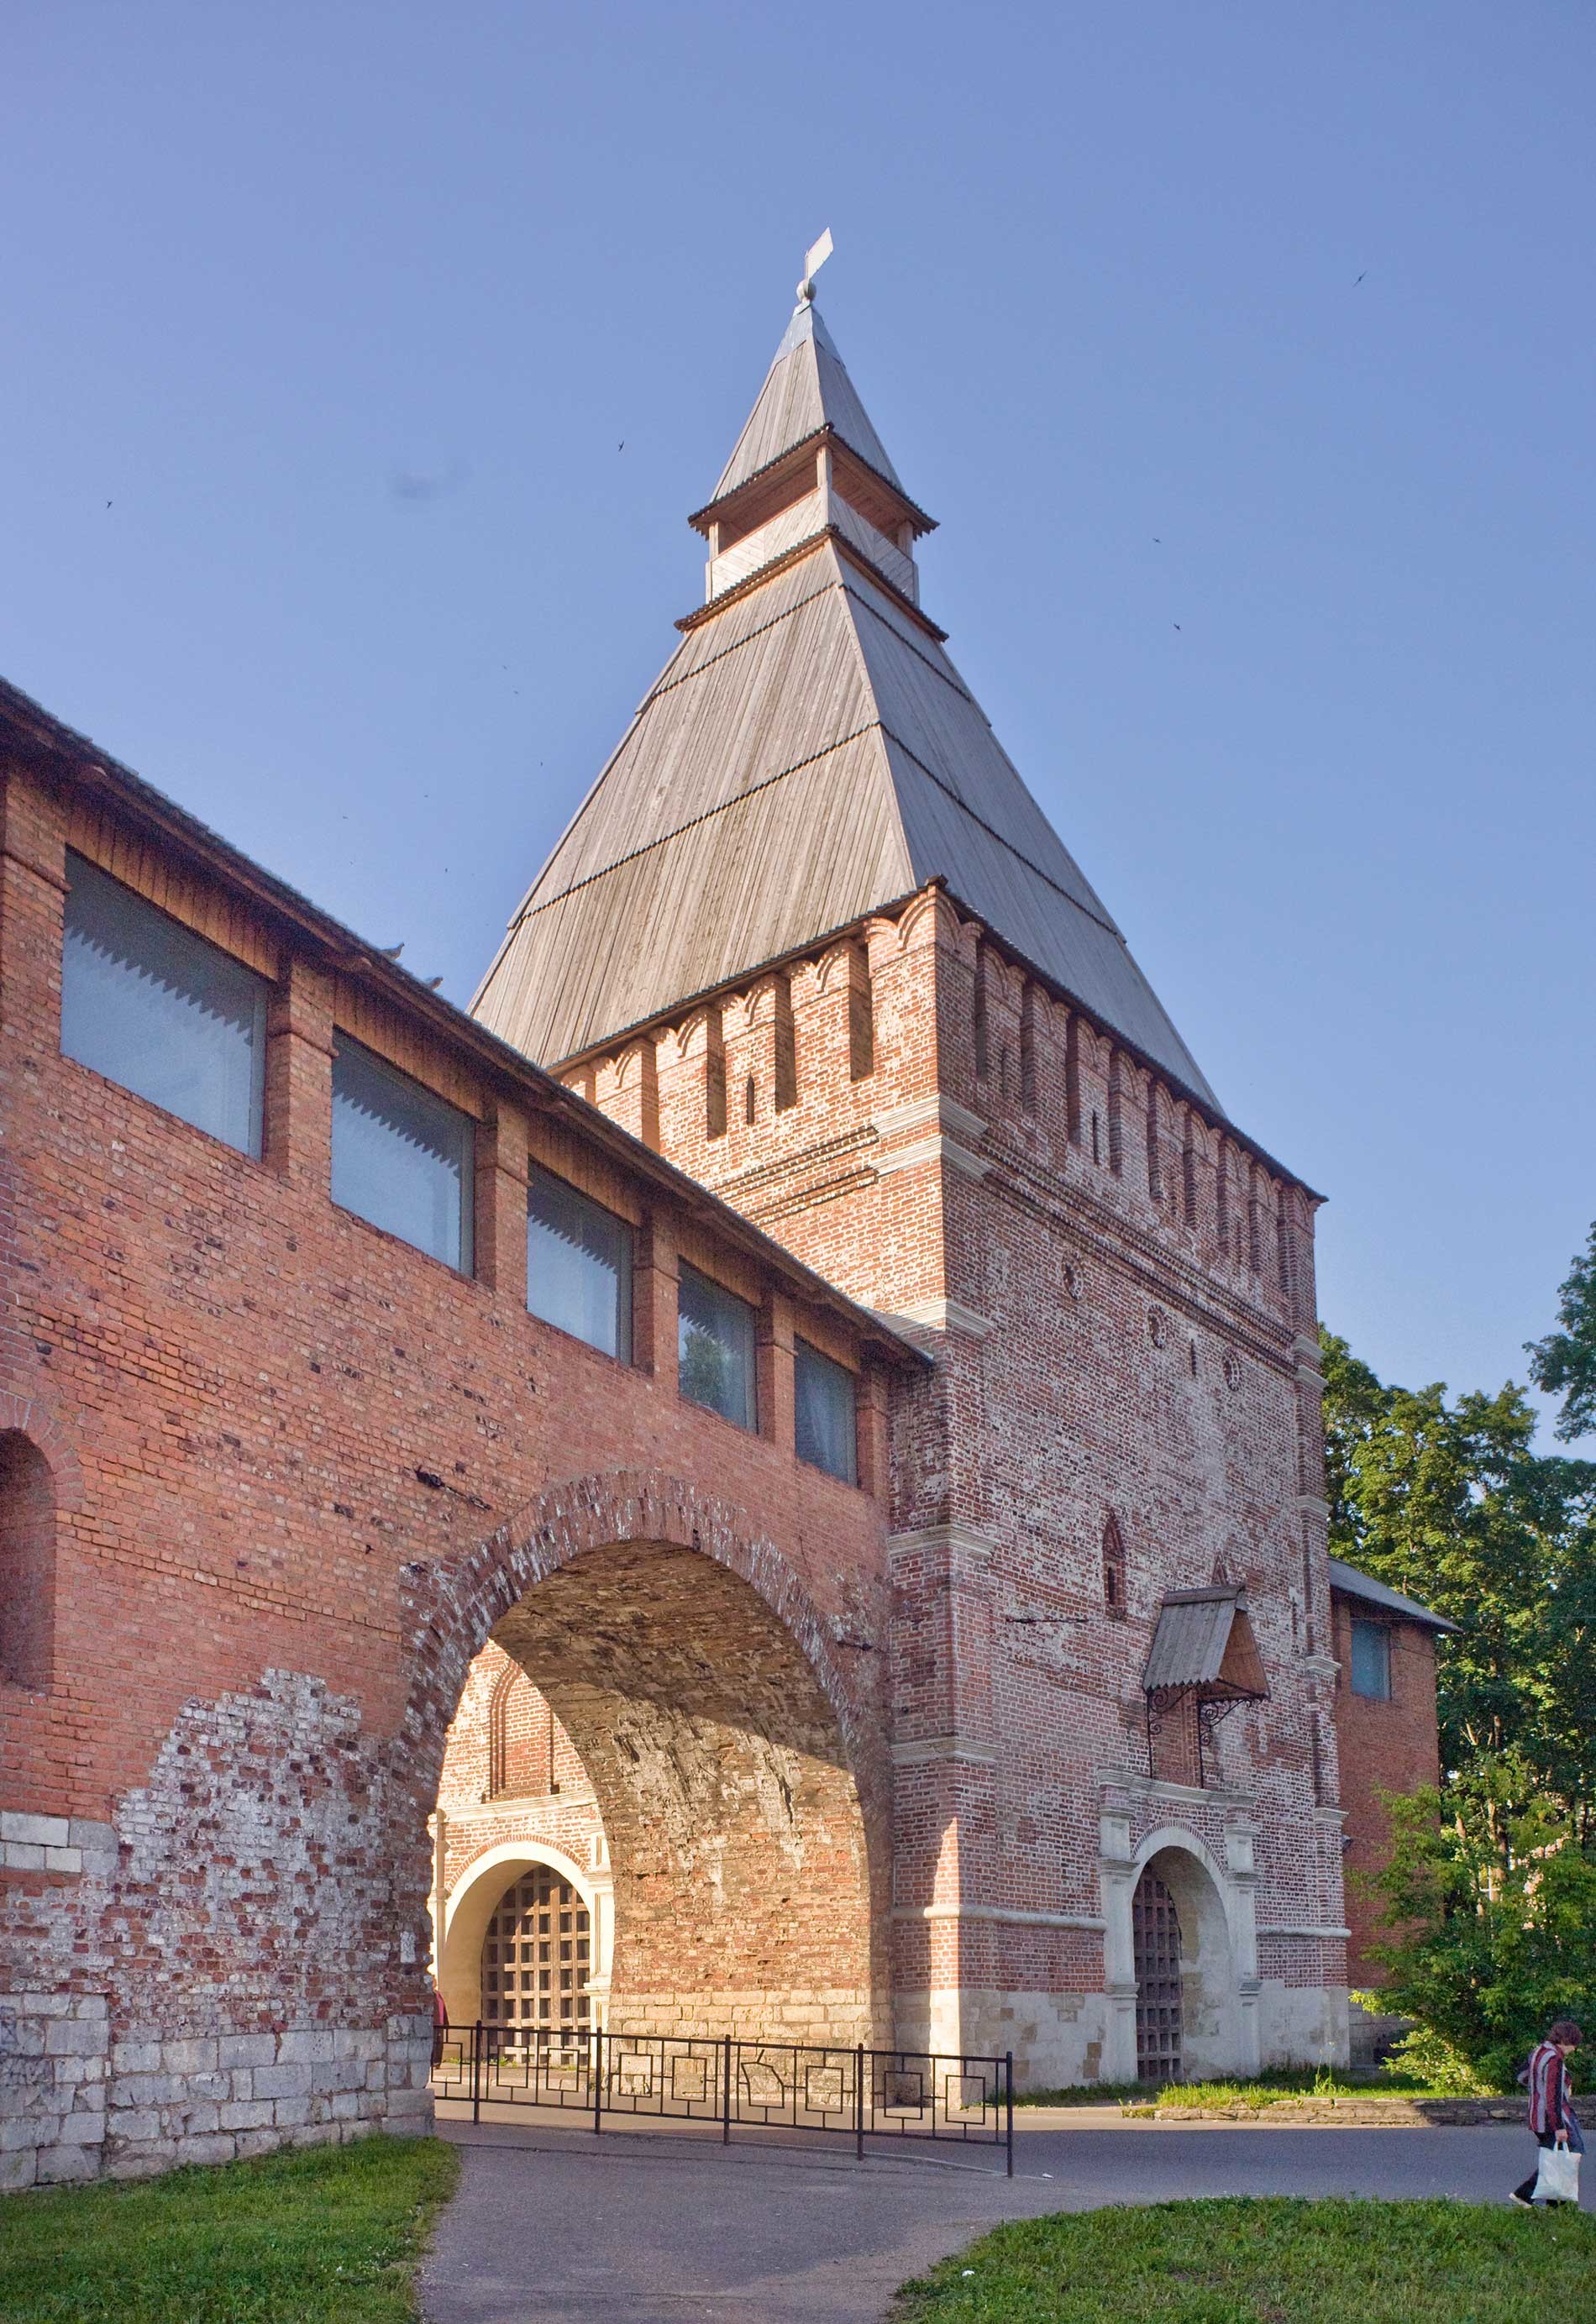 Smolensk citadel. St Nicholas Gate and Tower. July 1, 2014